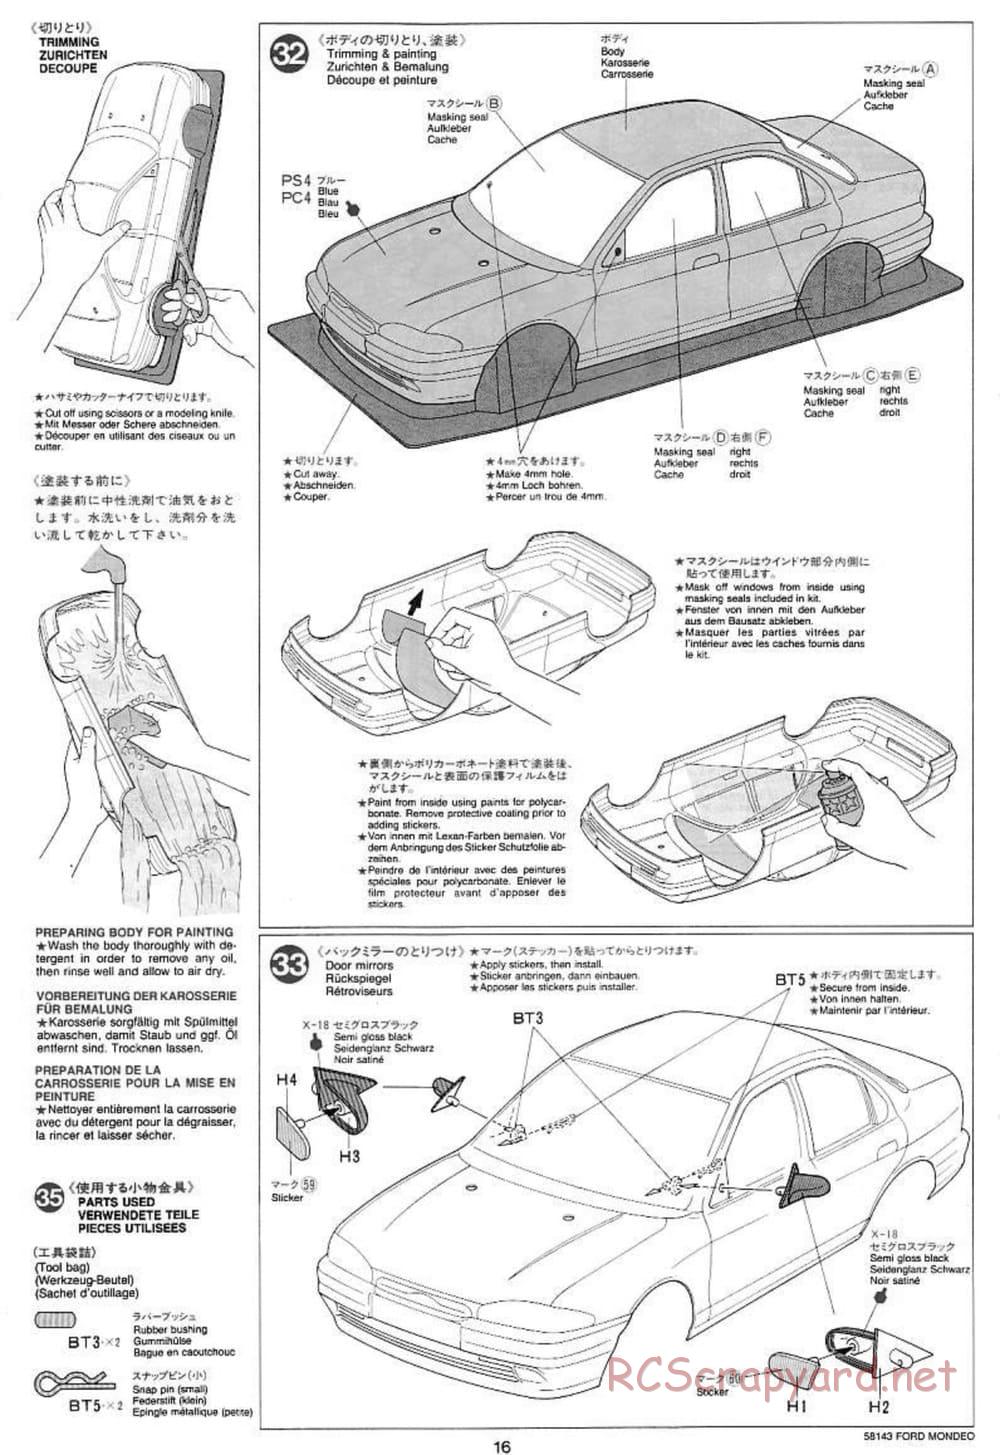 Tamiya - Ford Mondeo BTCC - FF-01 Chassis - Manual - Page 16